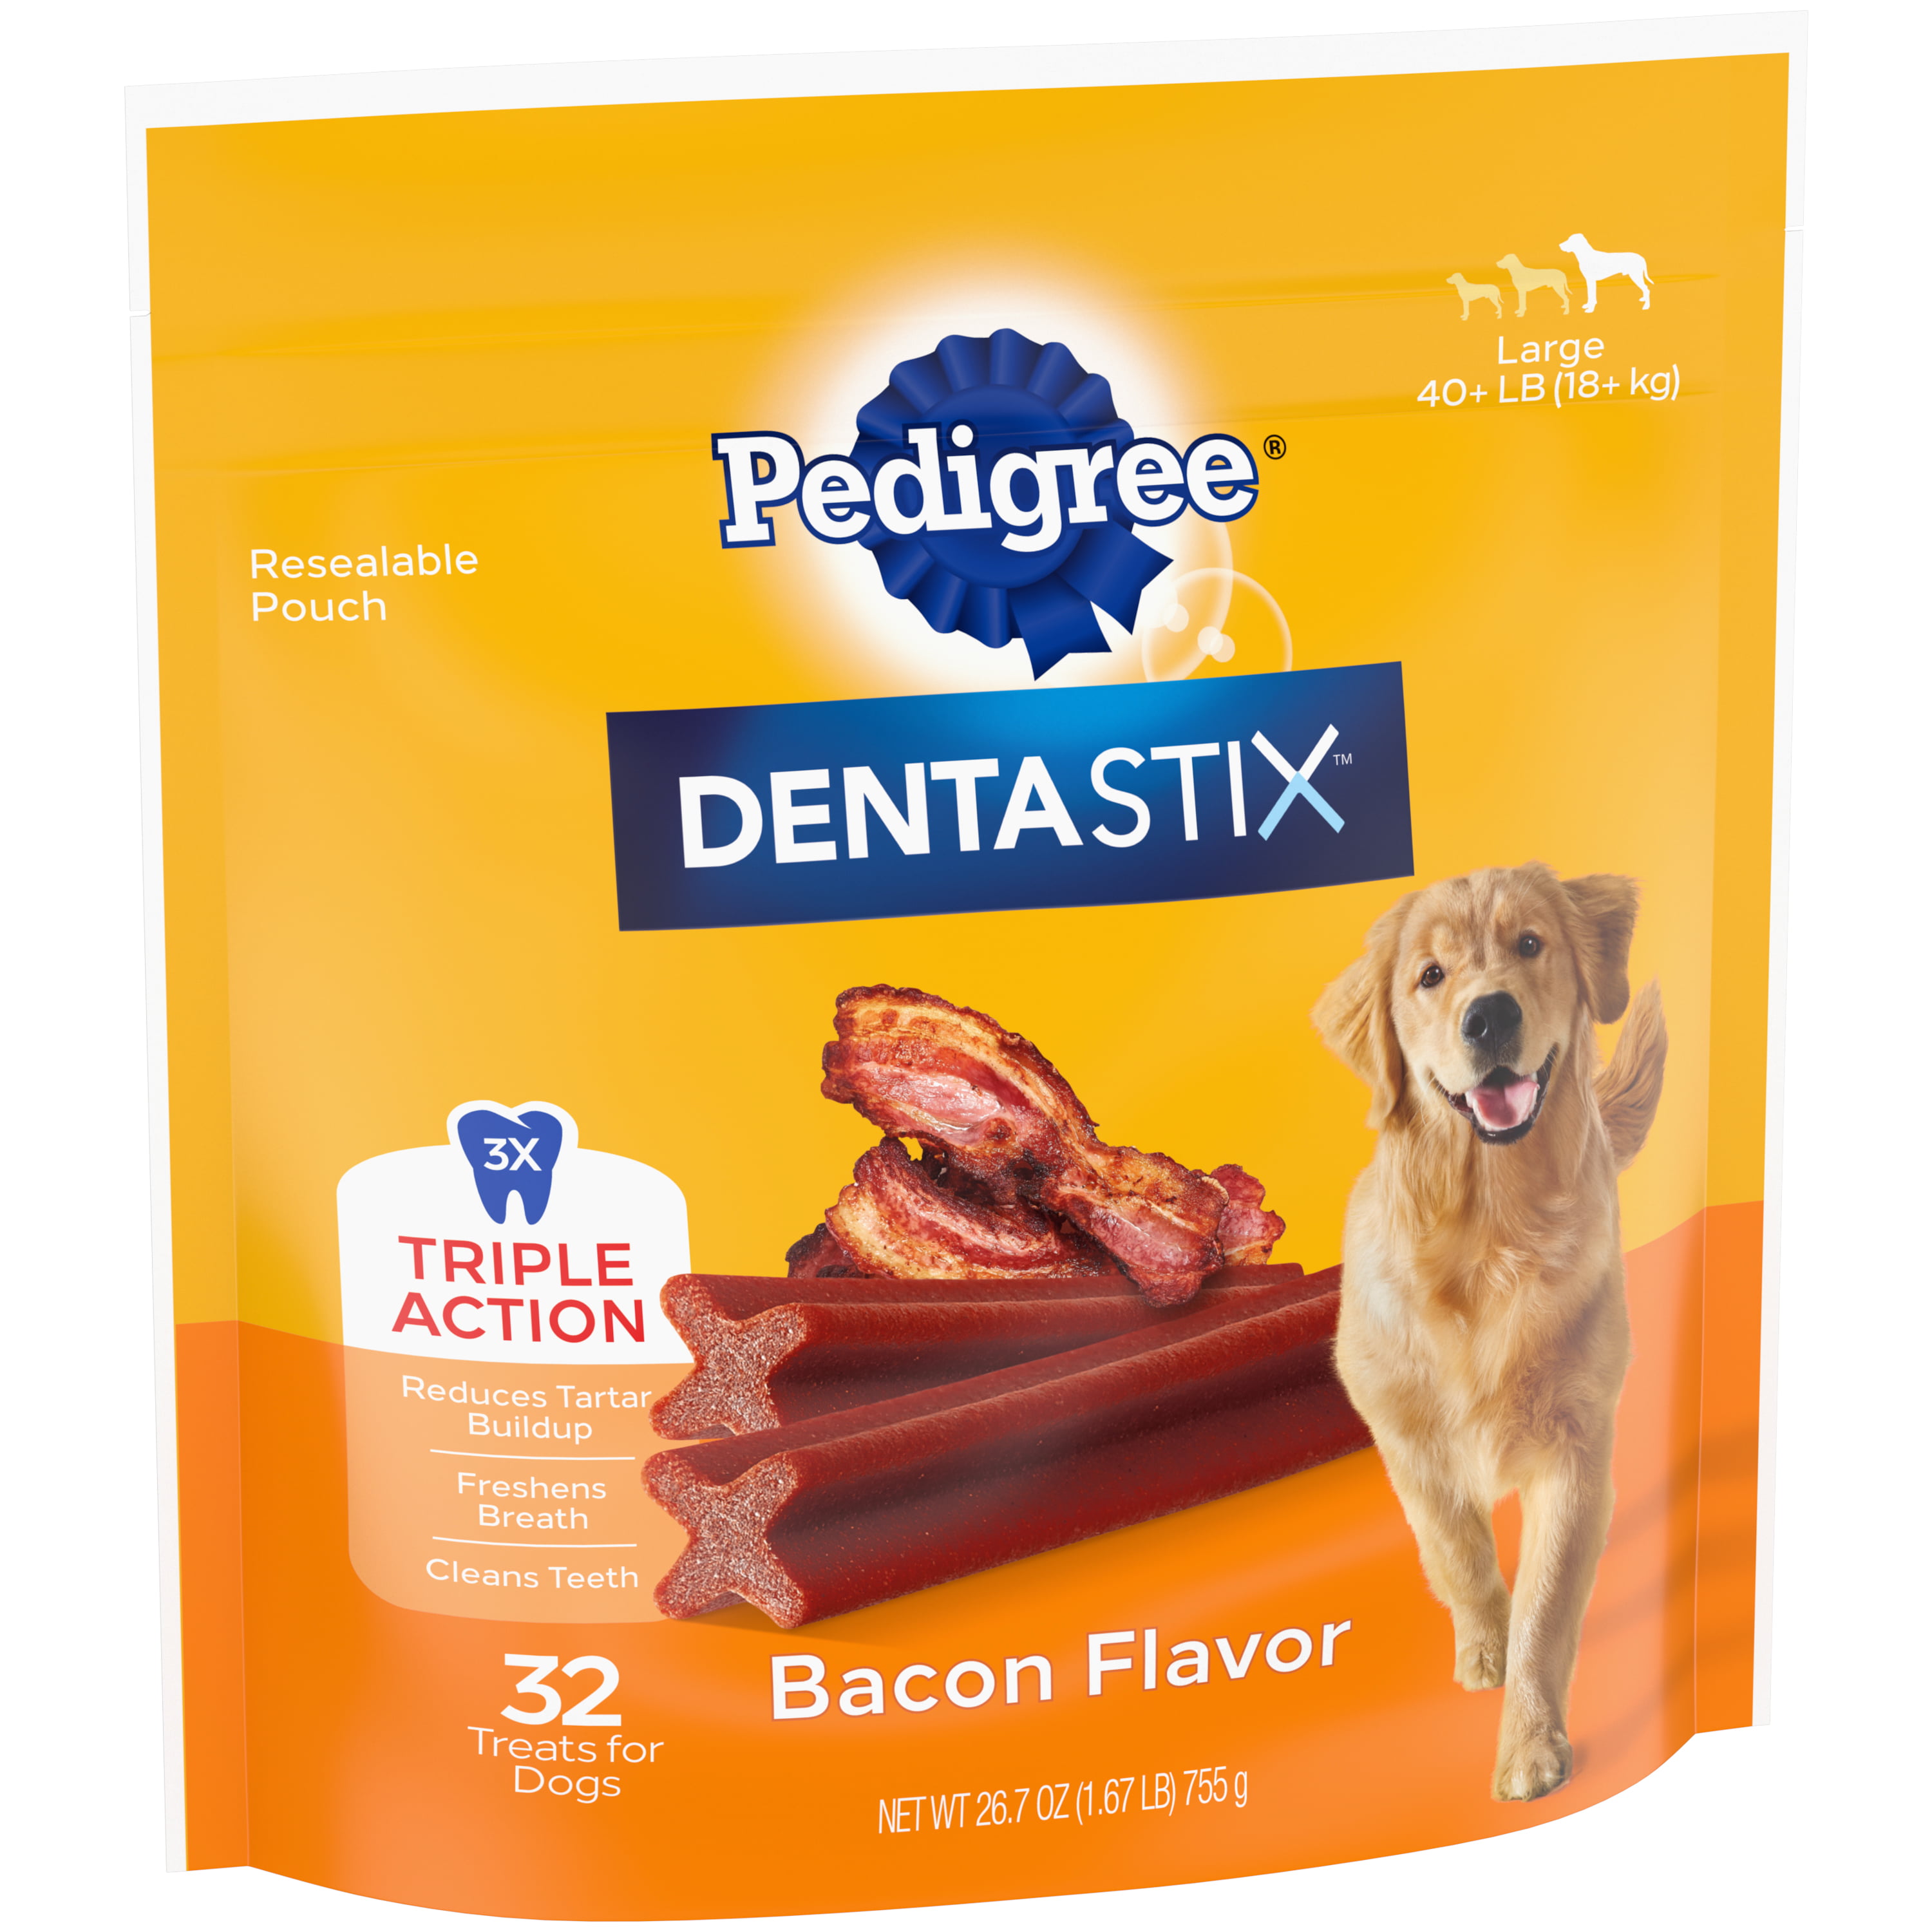 Pedigree Dentastix Bacon Flavor Large Dental Bones Treats for Dogs, 1.72 lb. Pack (32 Treats) - 1